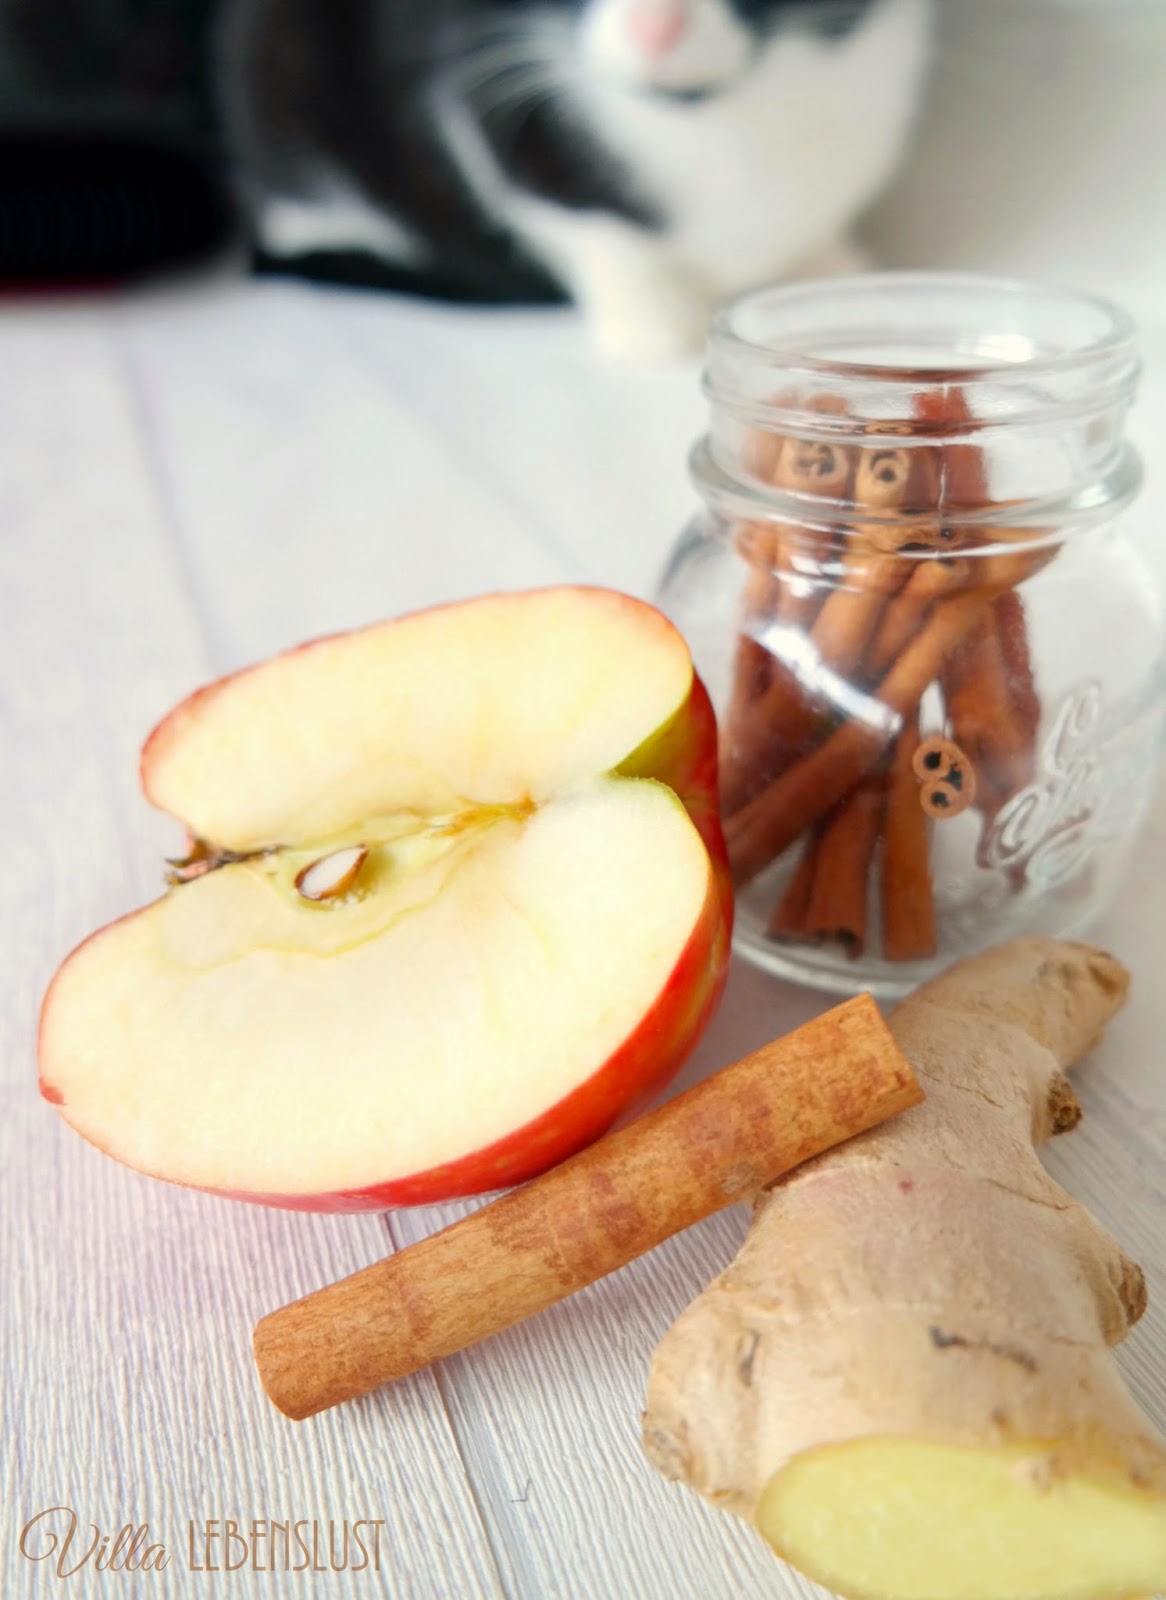 Villa Lebenslust Blog: Ade Winterblues! Frischer Apfel-Zimt Tee mit Ingwer